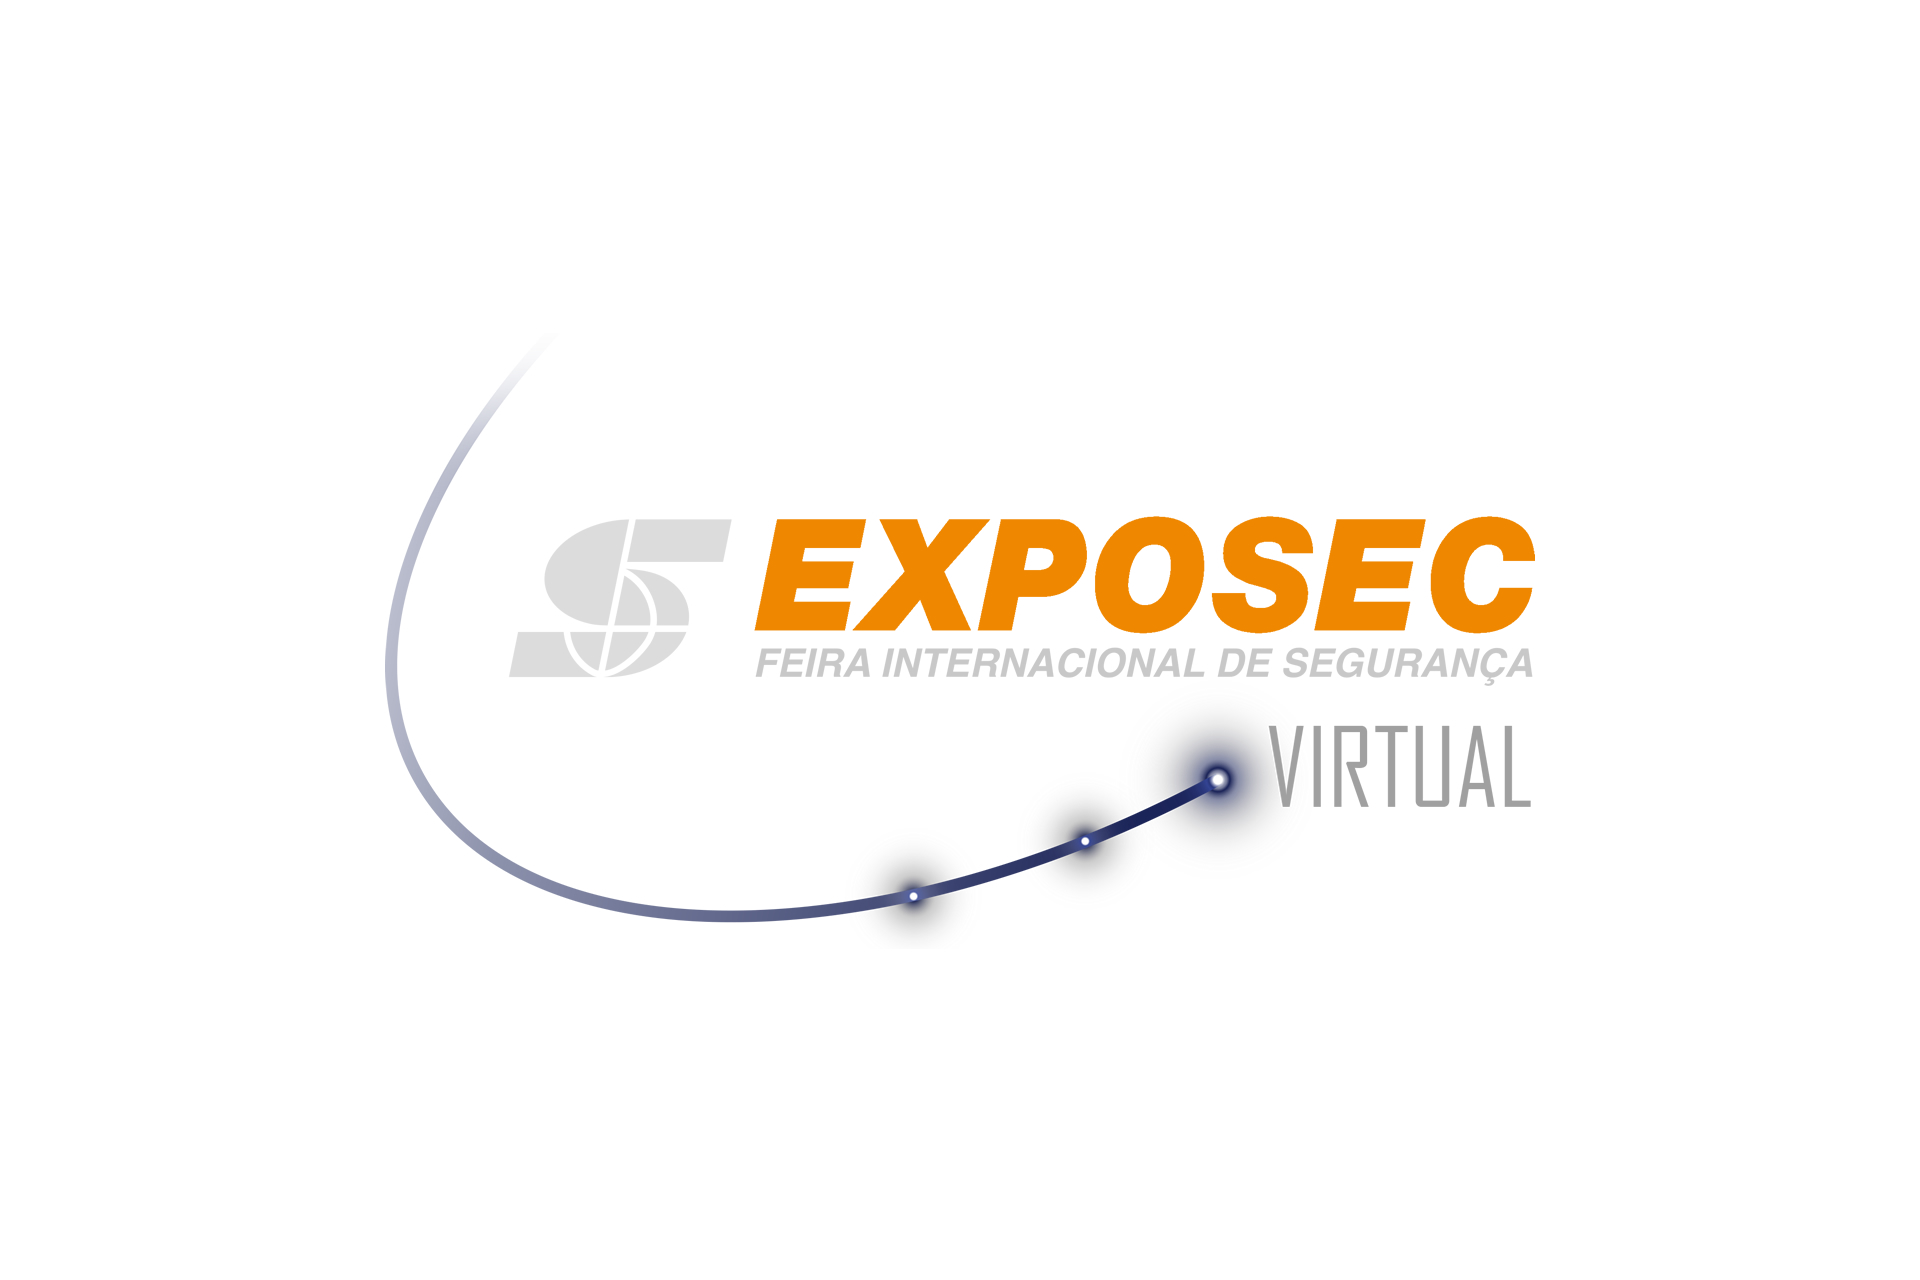 Exposec Virtual 2020